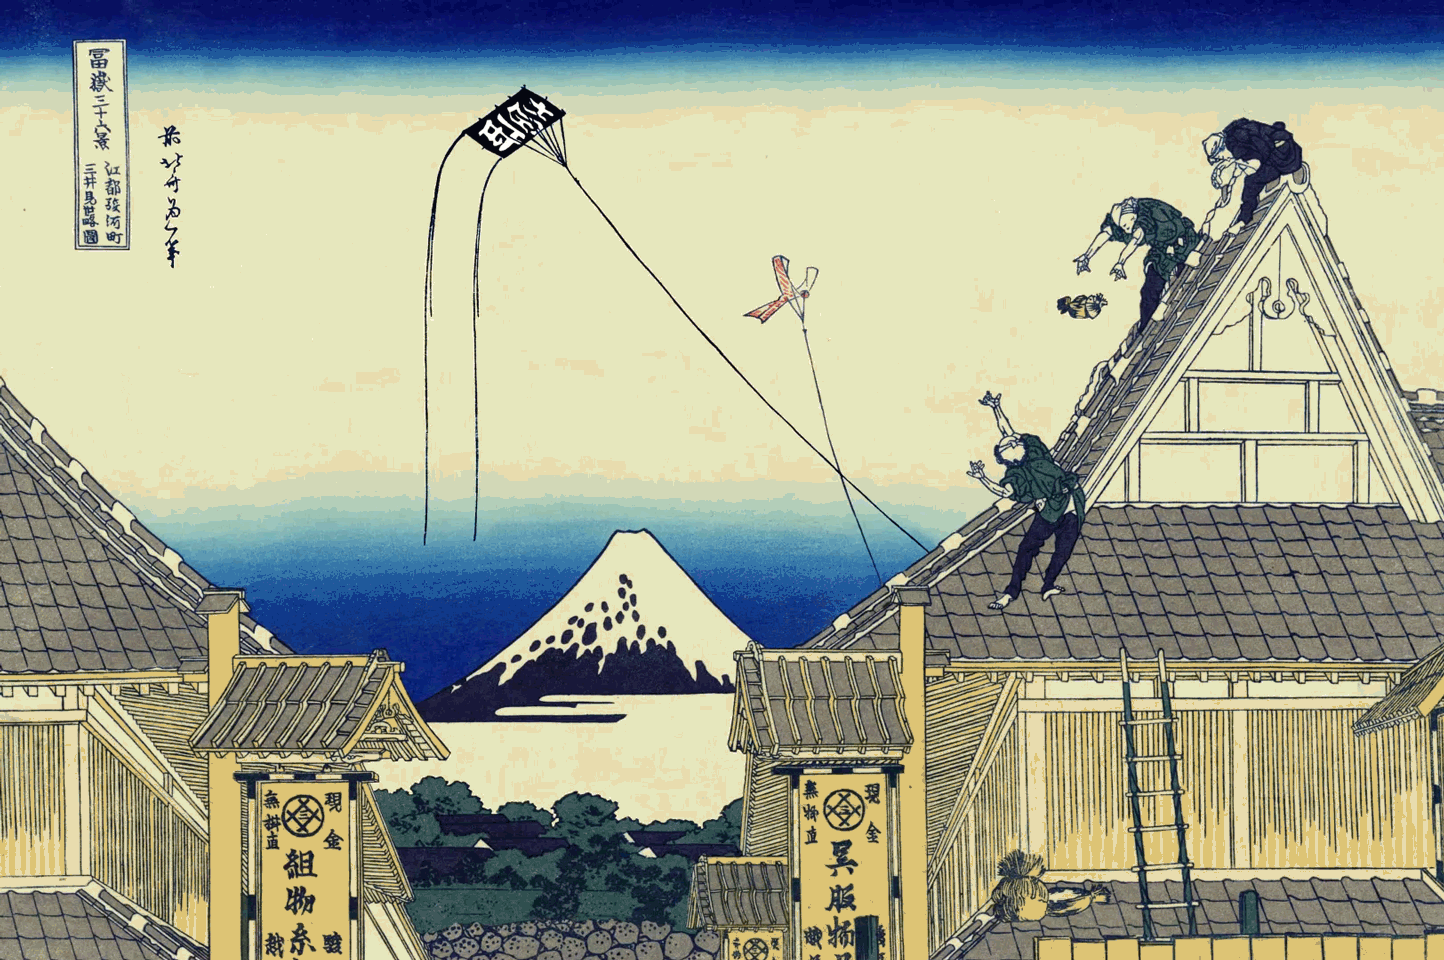 Katsushika Hokusai. Mitsui Shop at Surugachō in Edo, from the series Thirty-six Views of Mount Fuji. Segawa37